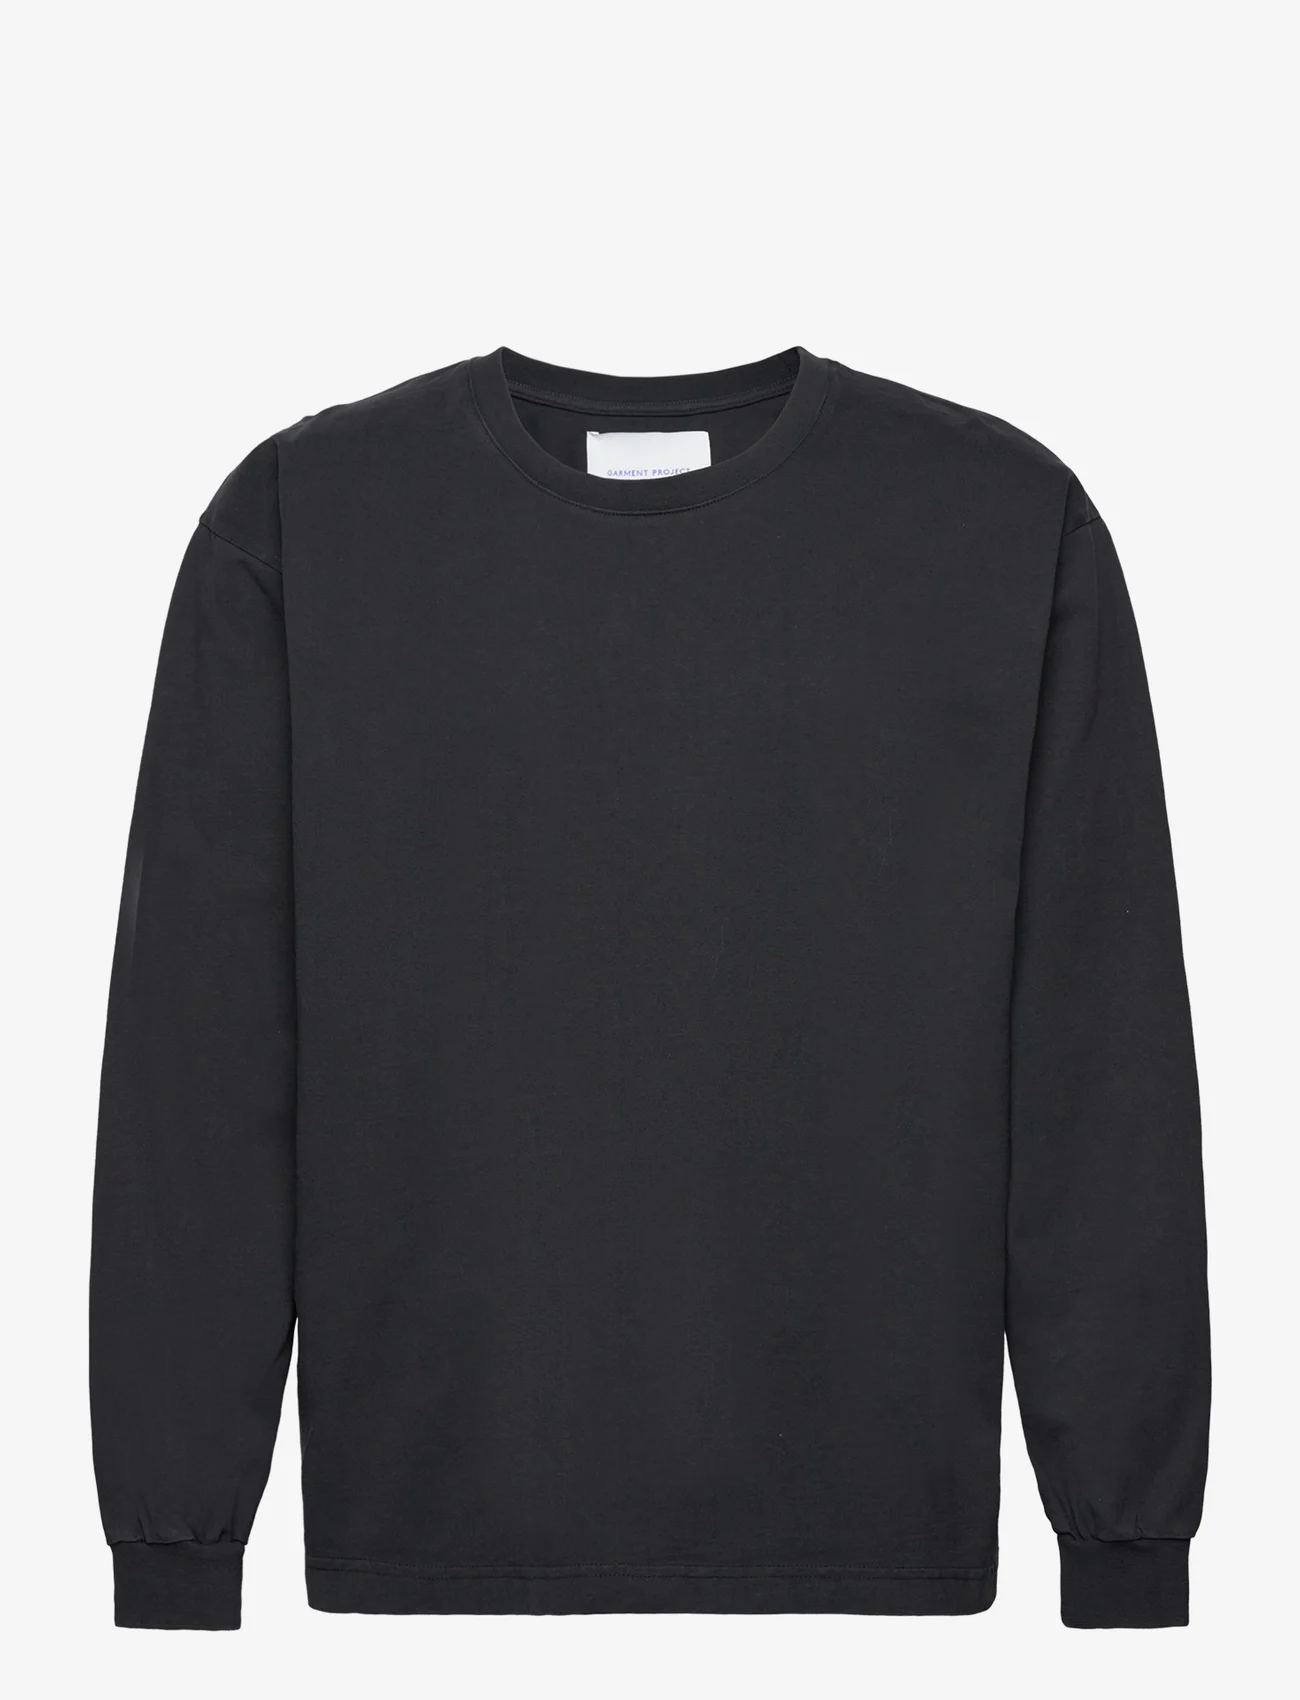 Garment Project - Heavy L/S Tee - Black - langærmede t-shirts - black - 0